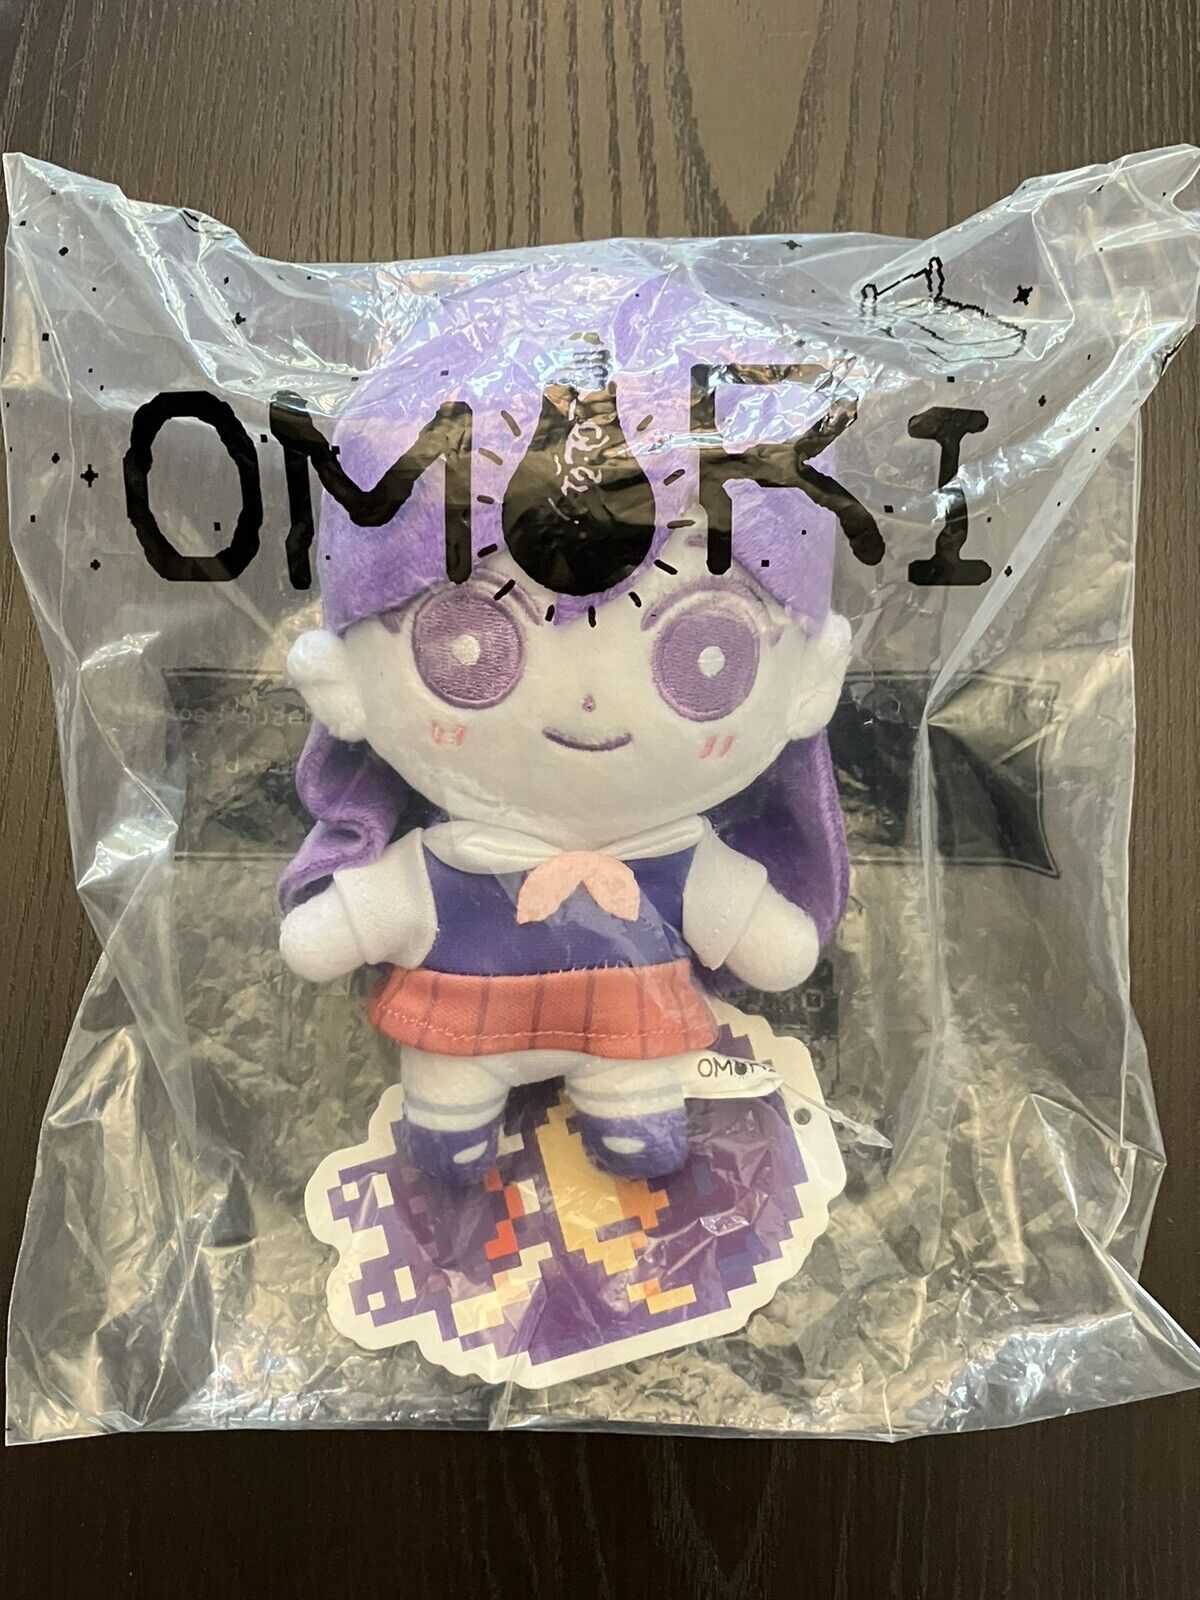 OMOCAT Omori MARI Plush Official Authentic NEW SEALED IN HAND